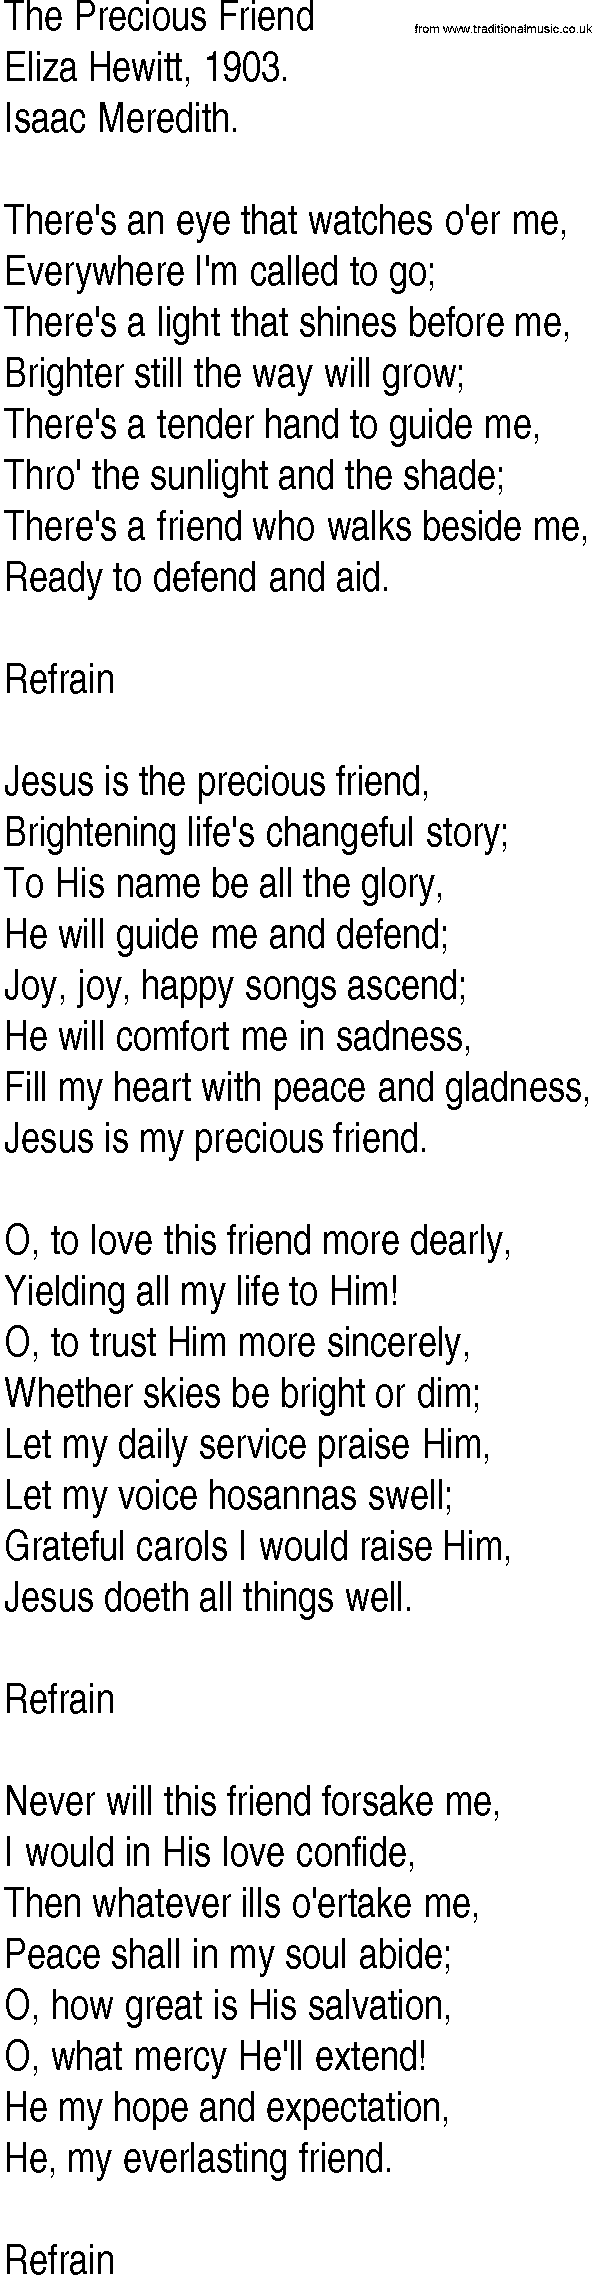 Hymn and Gospel Song: The Precious Friend by Eliza Hewitt lyrics